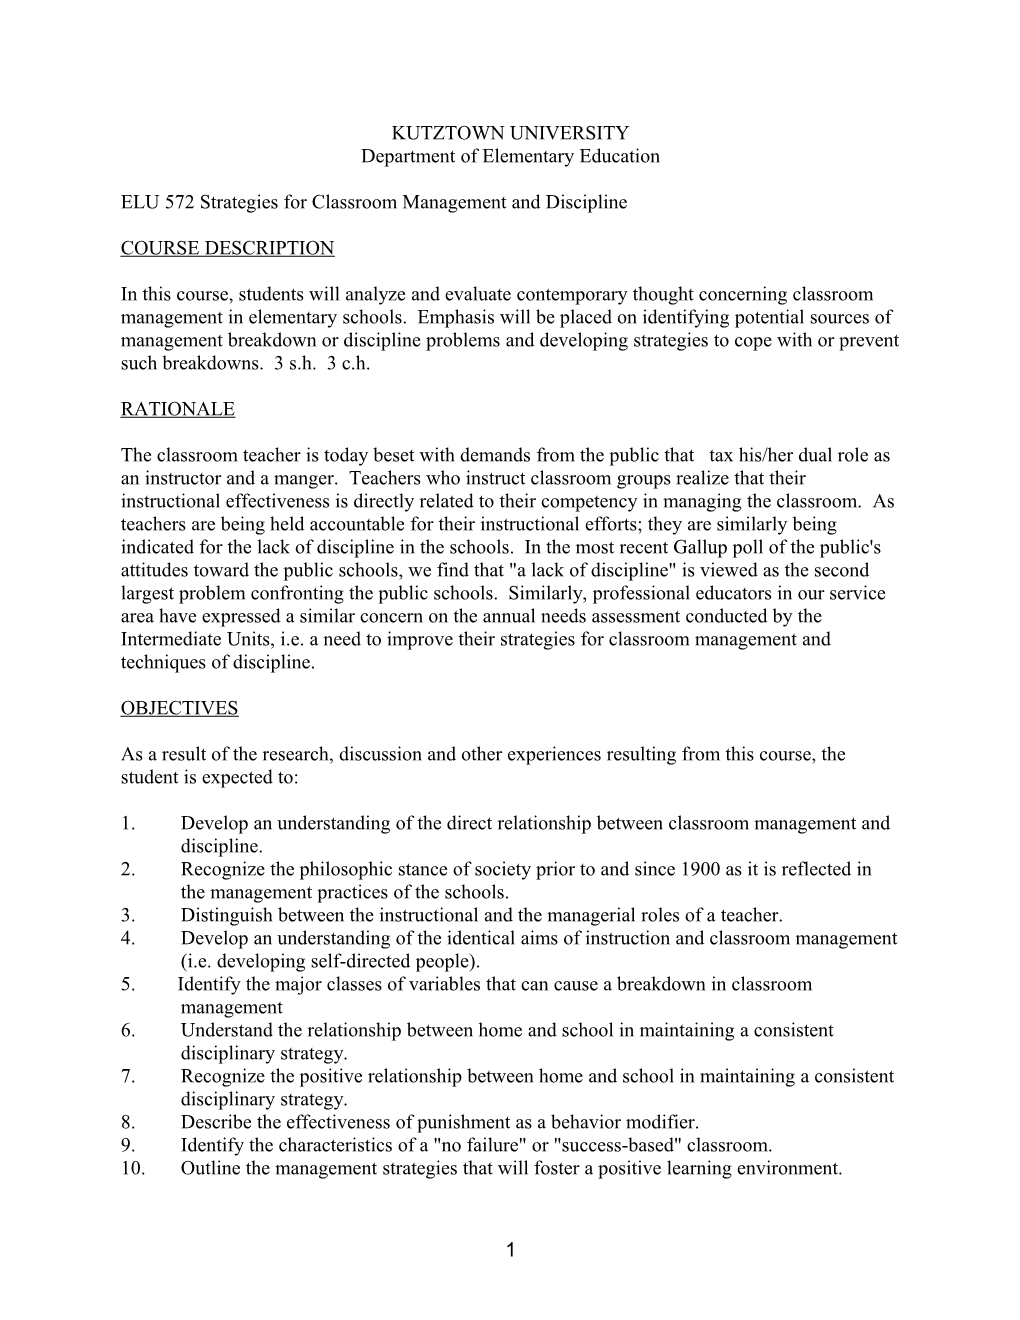 ELU 572 Strategies for Classroom Management and Discipline